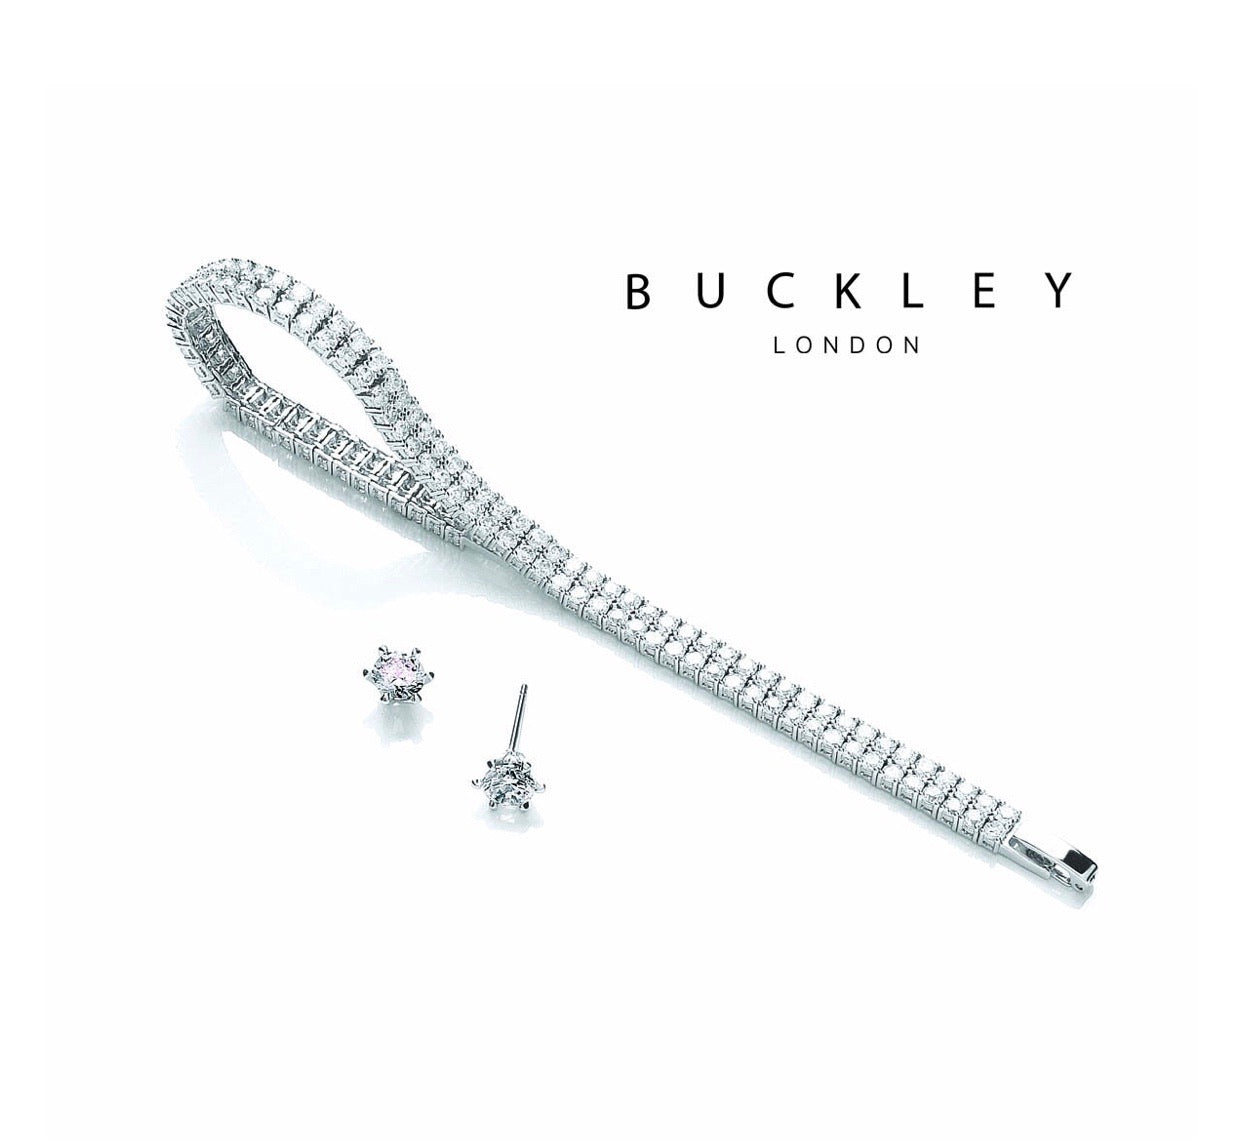 BUCKLEY LONDON